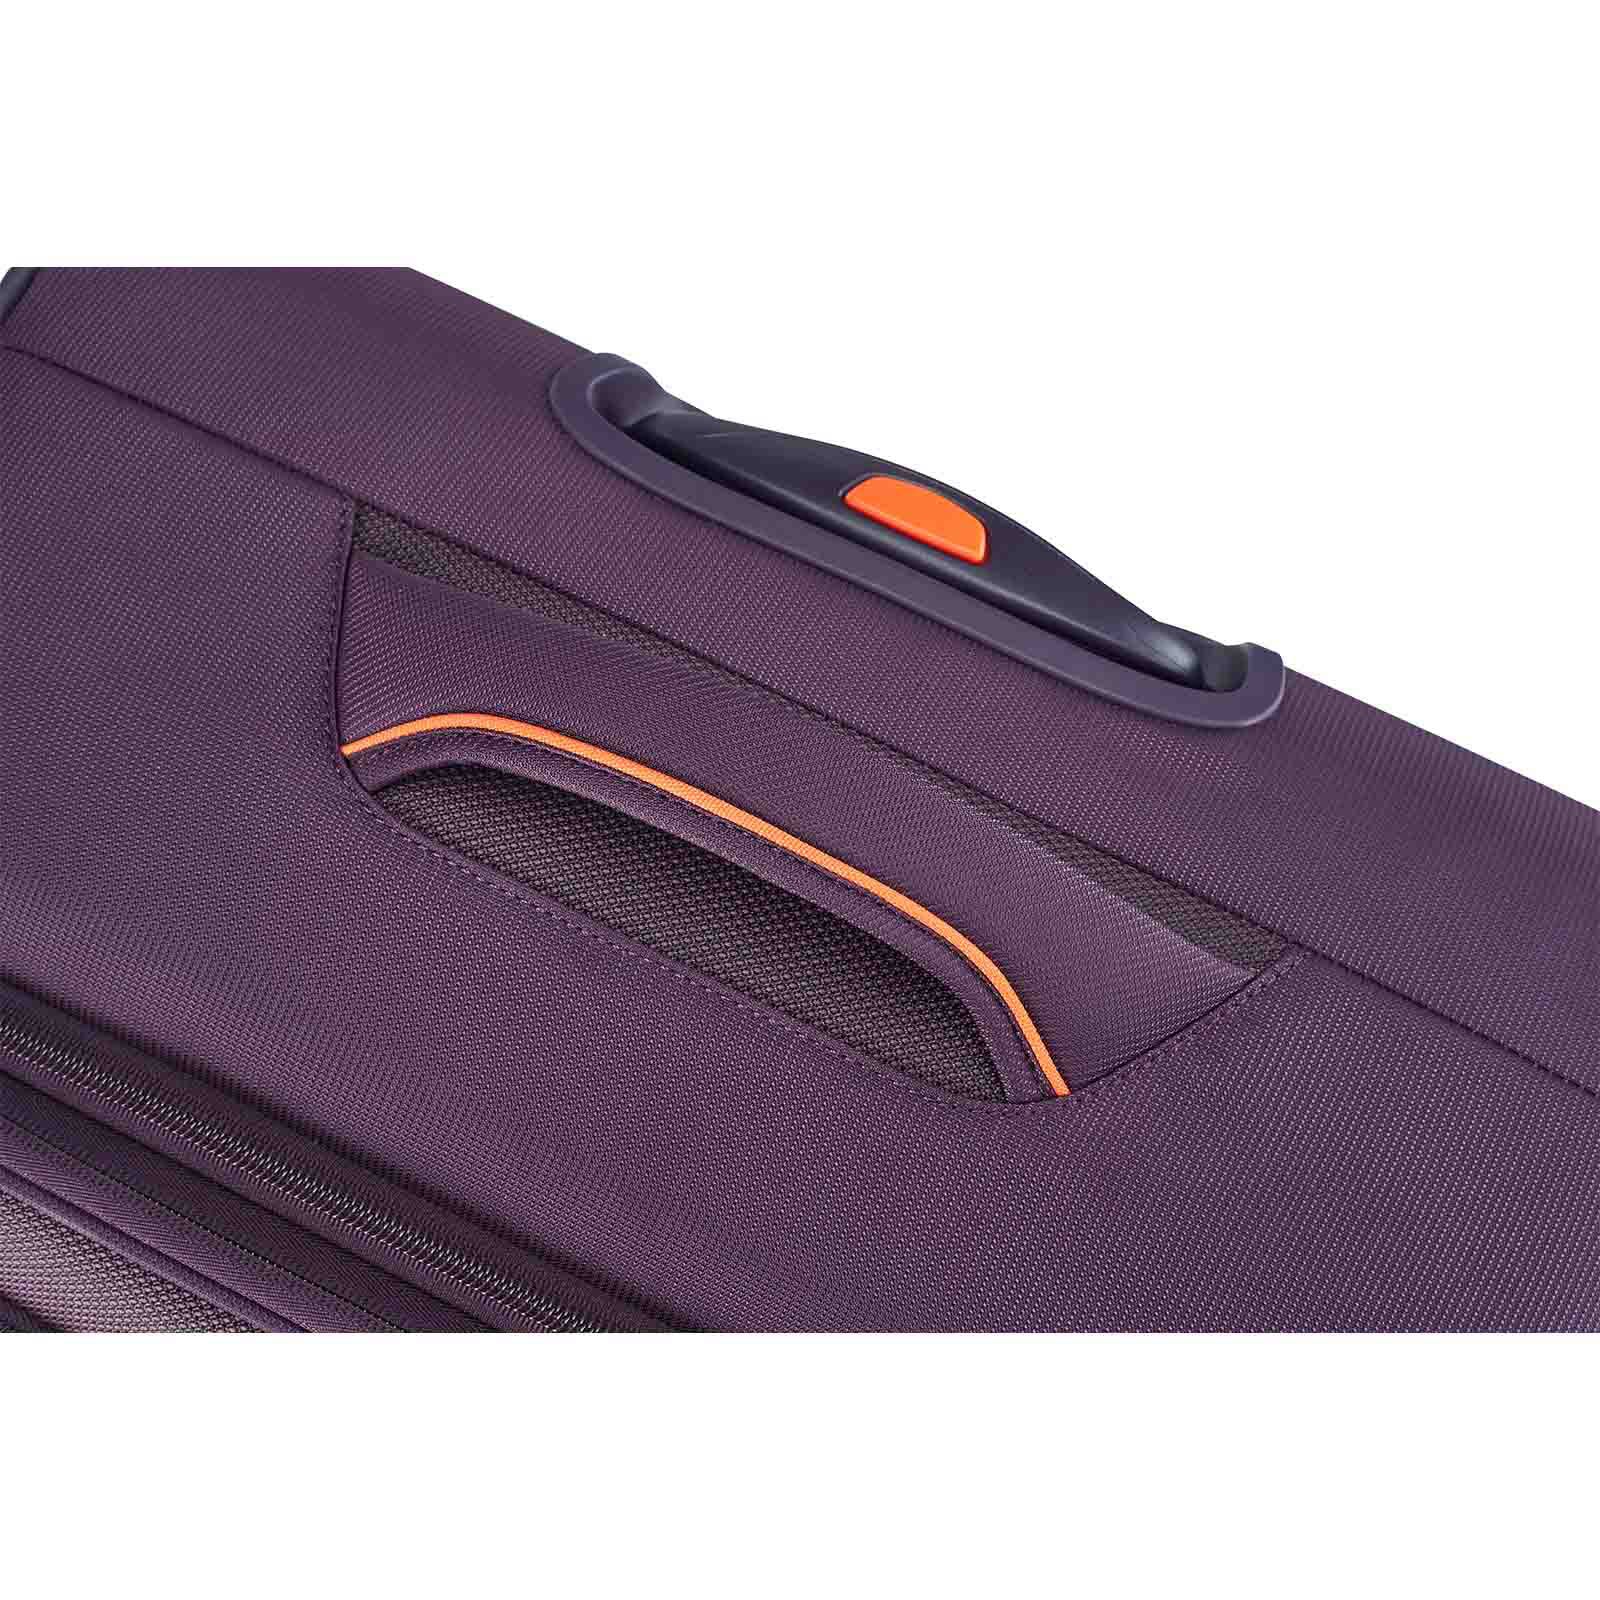 American Tourister Applite 4 Eco 71cm Suitcase Purple-Orange